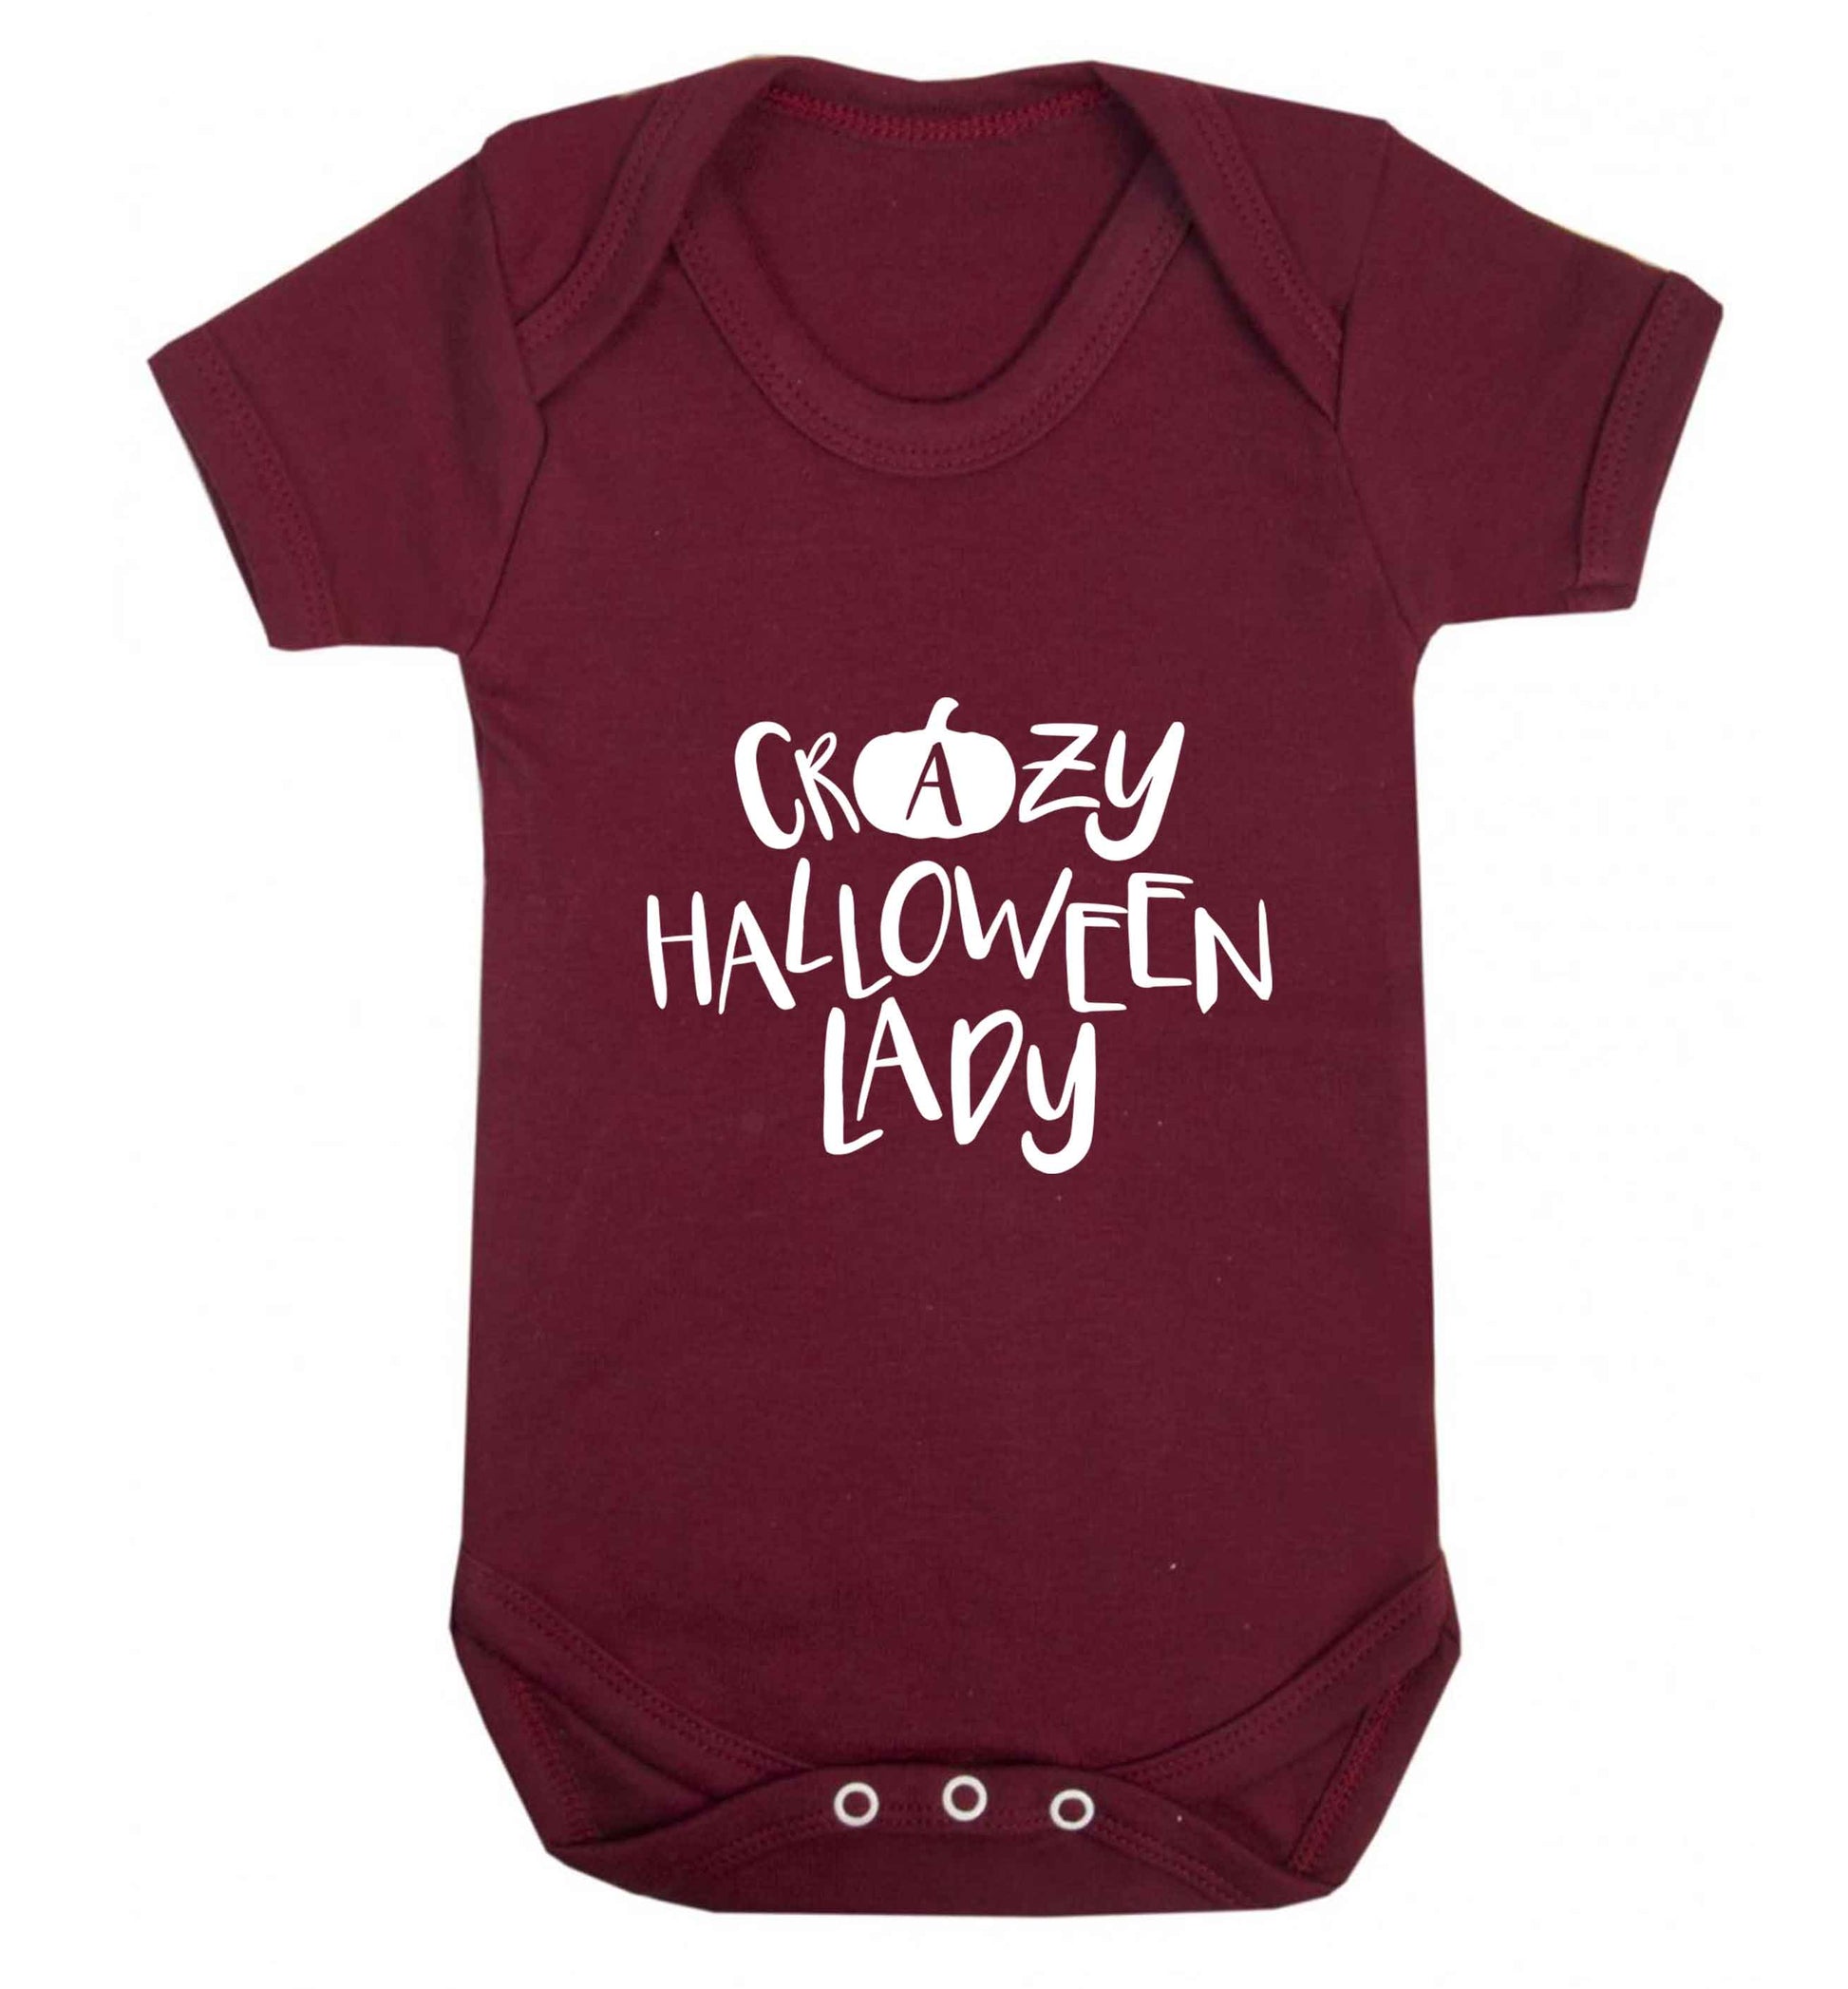 Crazy halloween lady baby vest maroon 18-24 months